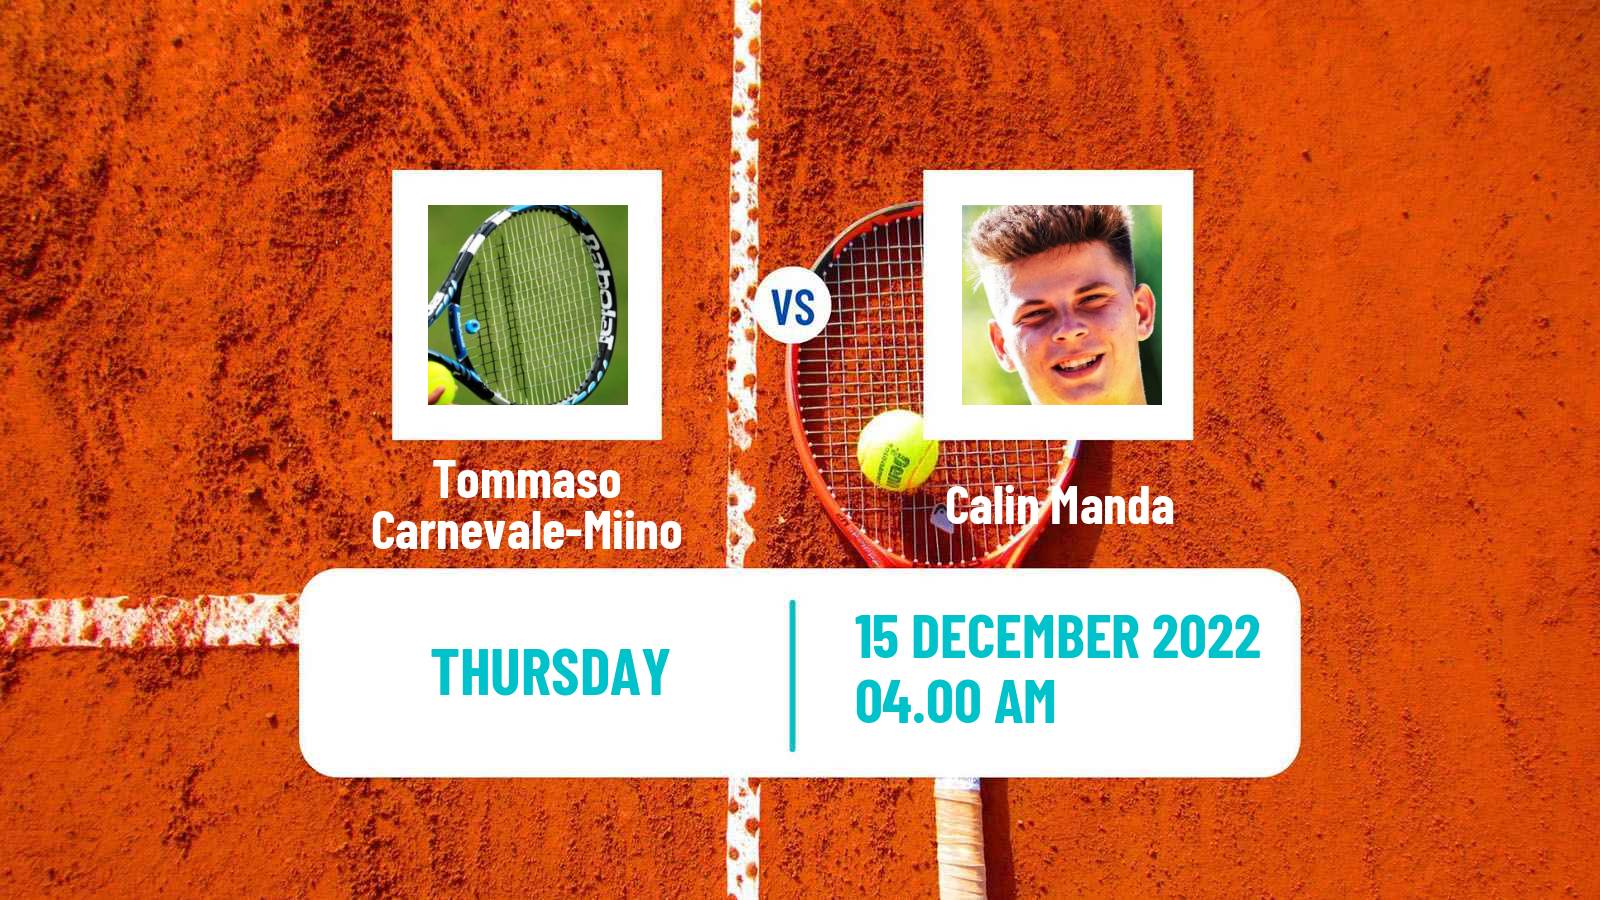 Tennis ITF Tournaments Tommaso Carnevale-Miino - Calin Manda